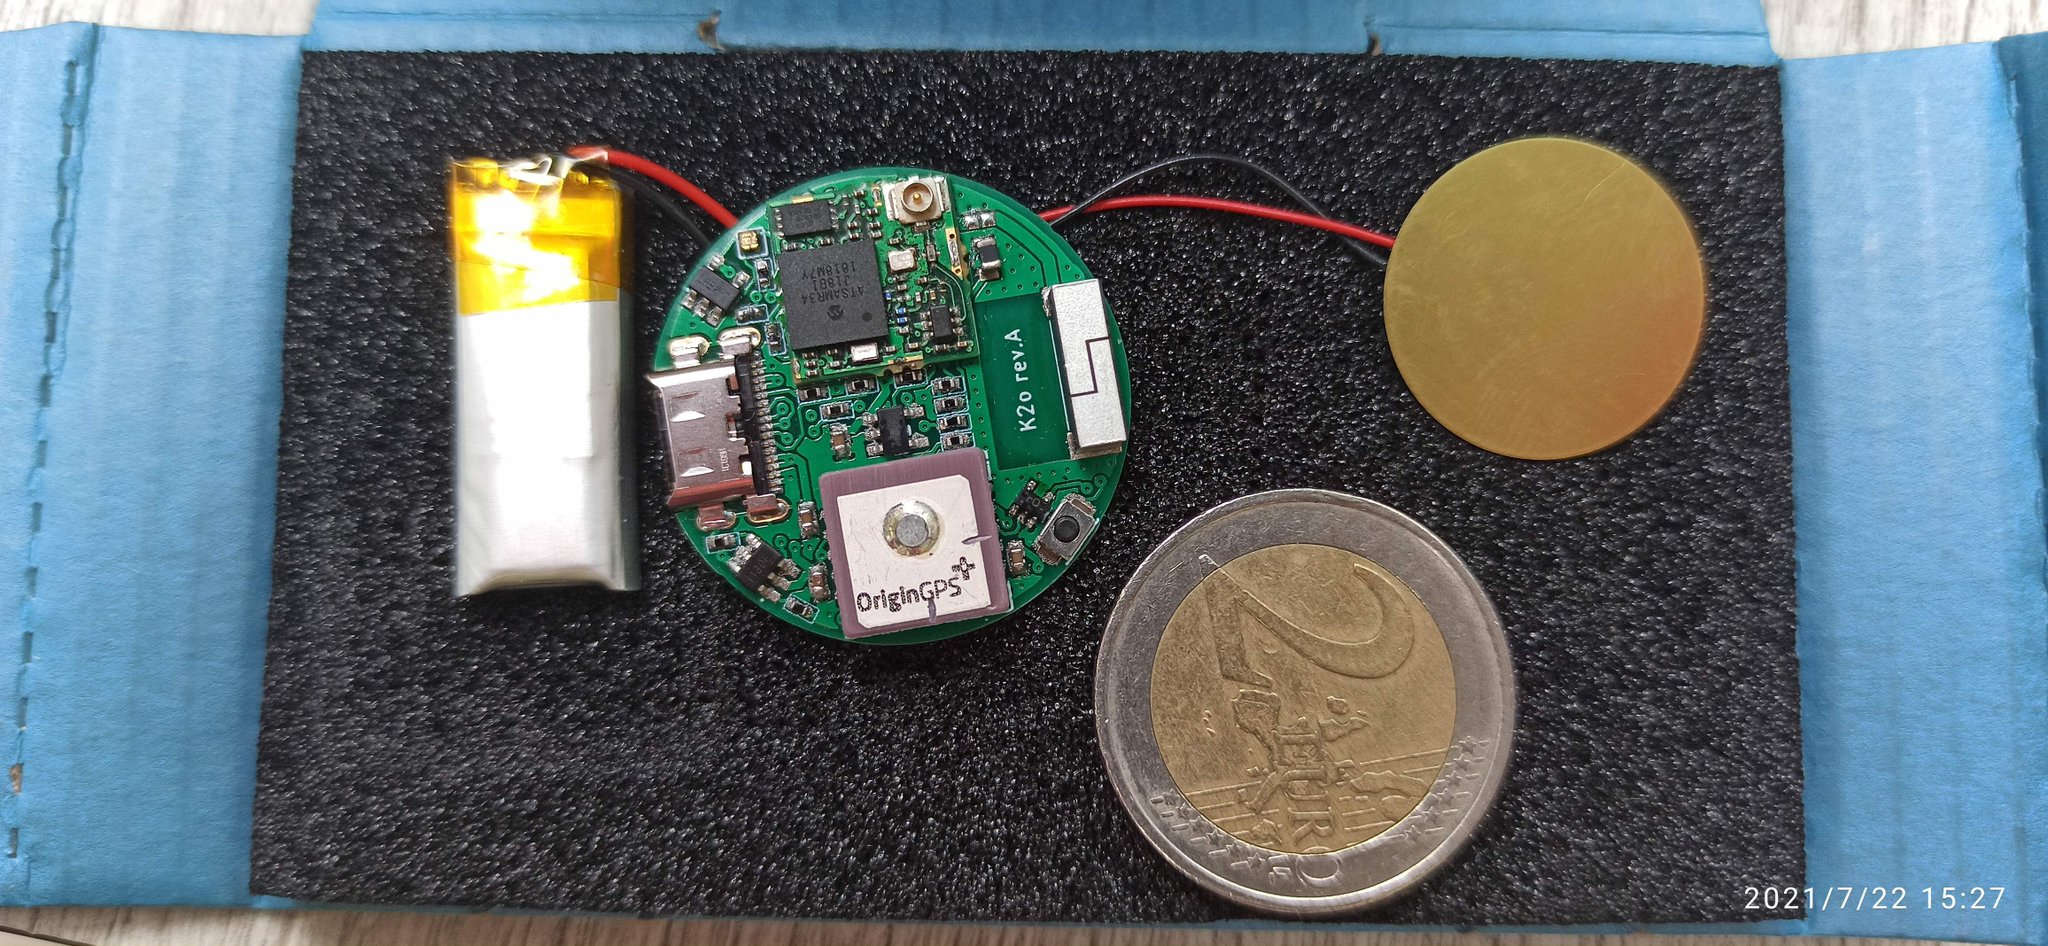 Meet the Coin-Sized GPS Cat Tracker – the Katzen Tracker